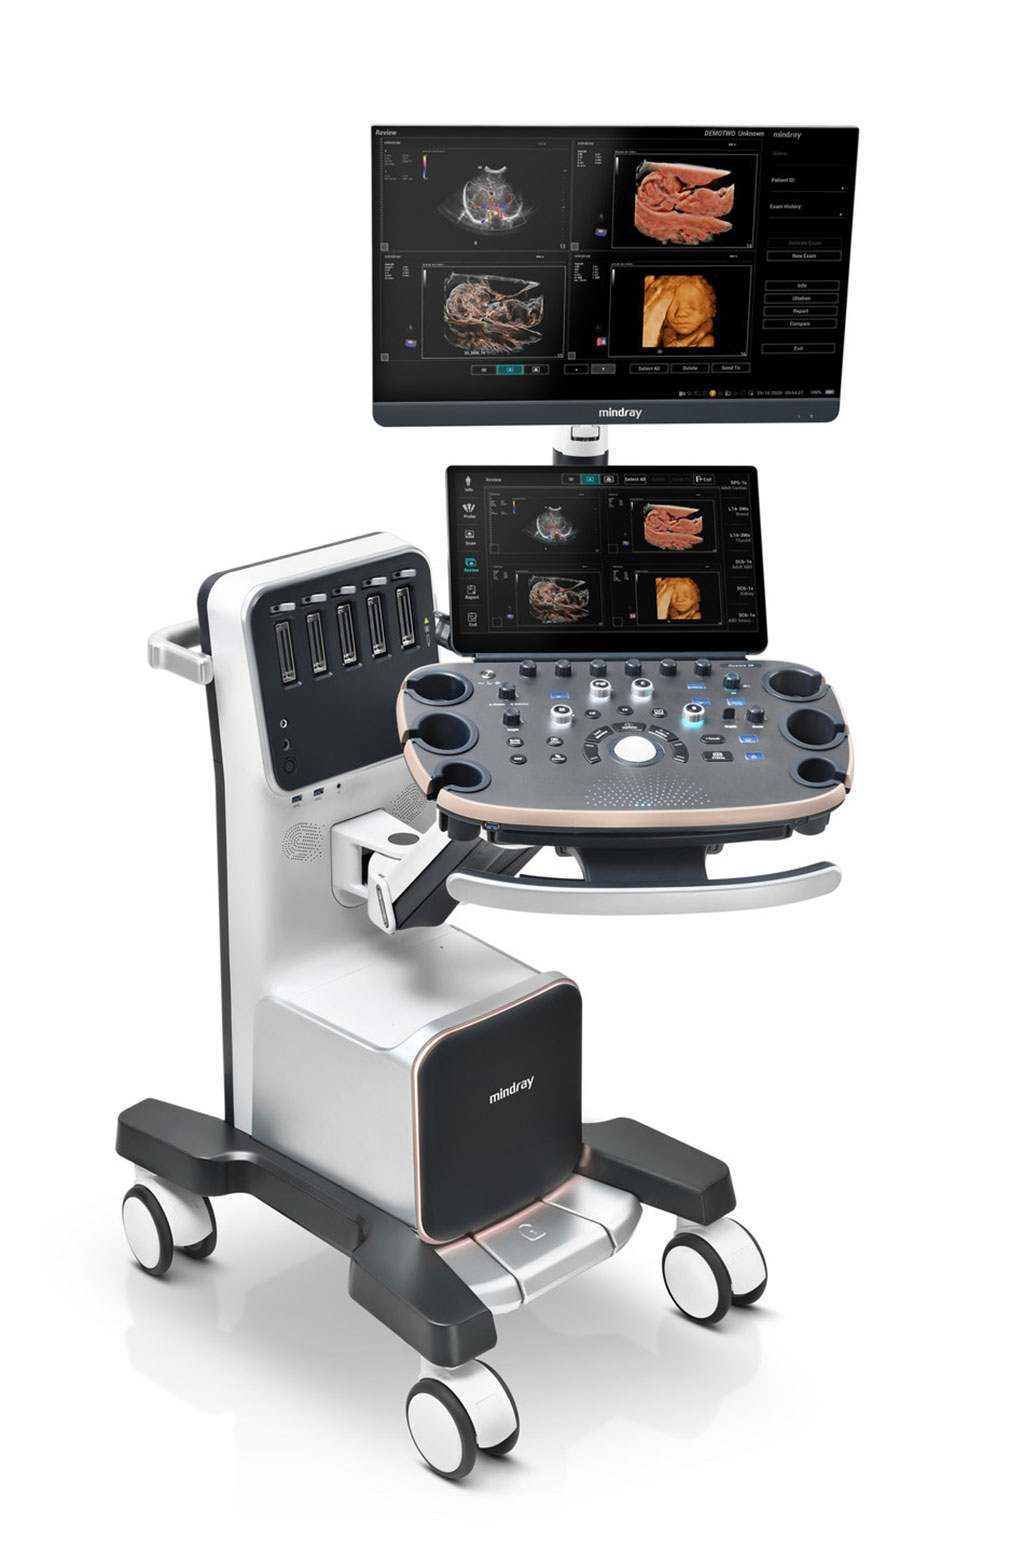 Image: The Nuewa I9 OB/GYN ultrasound system (Photo courtesy of Mindray)